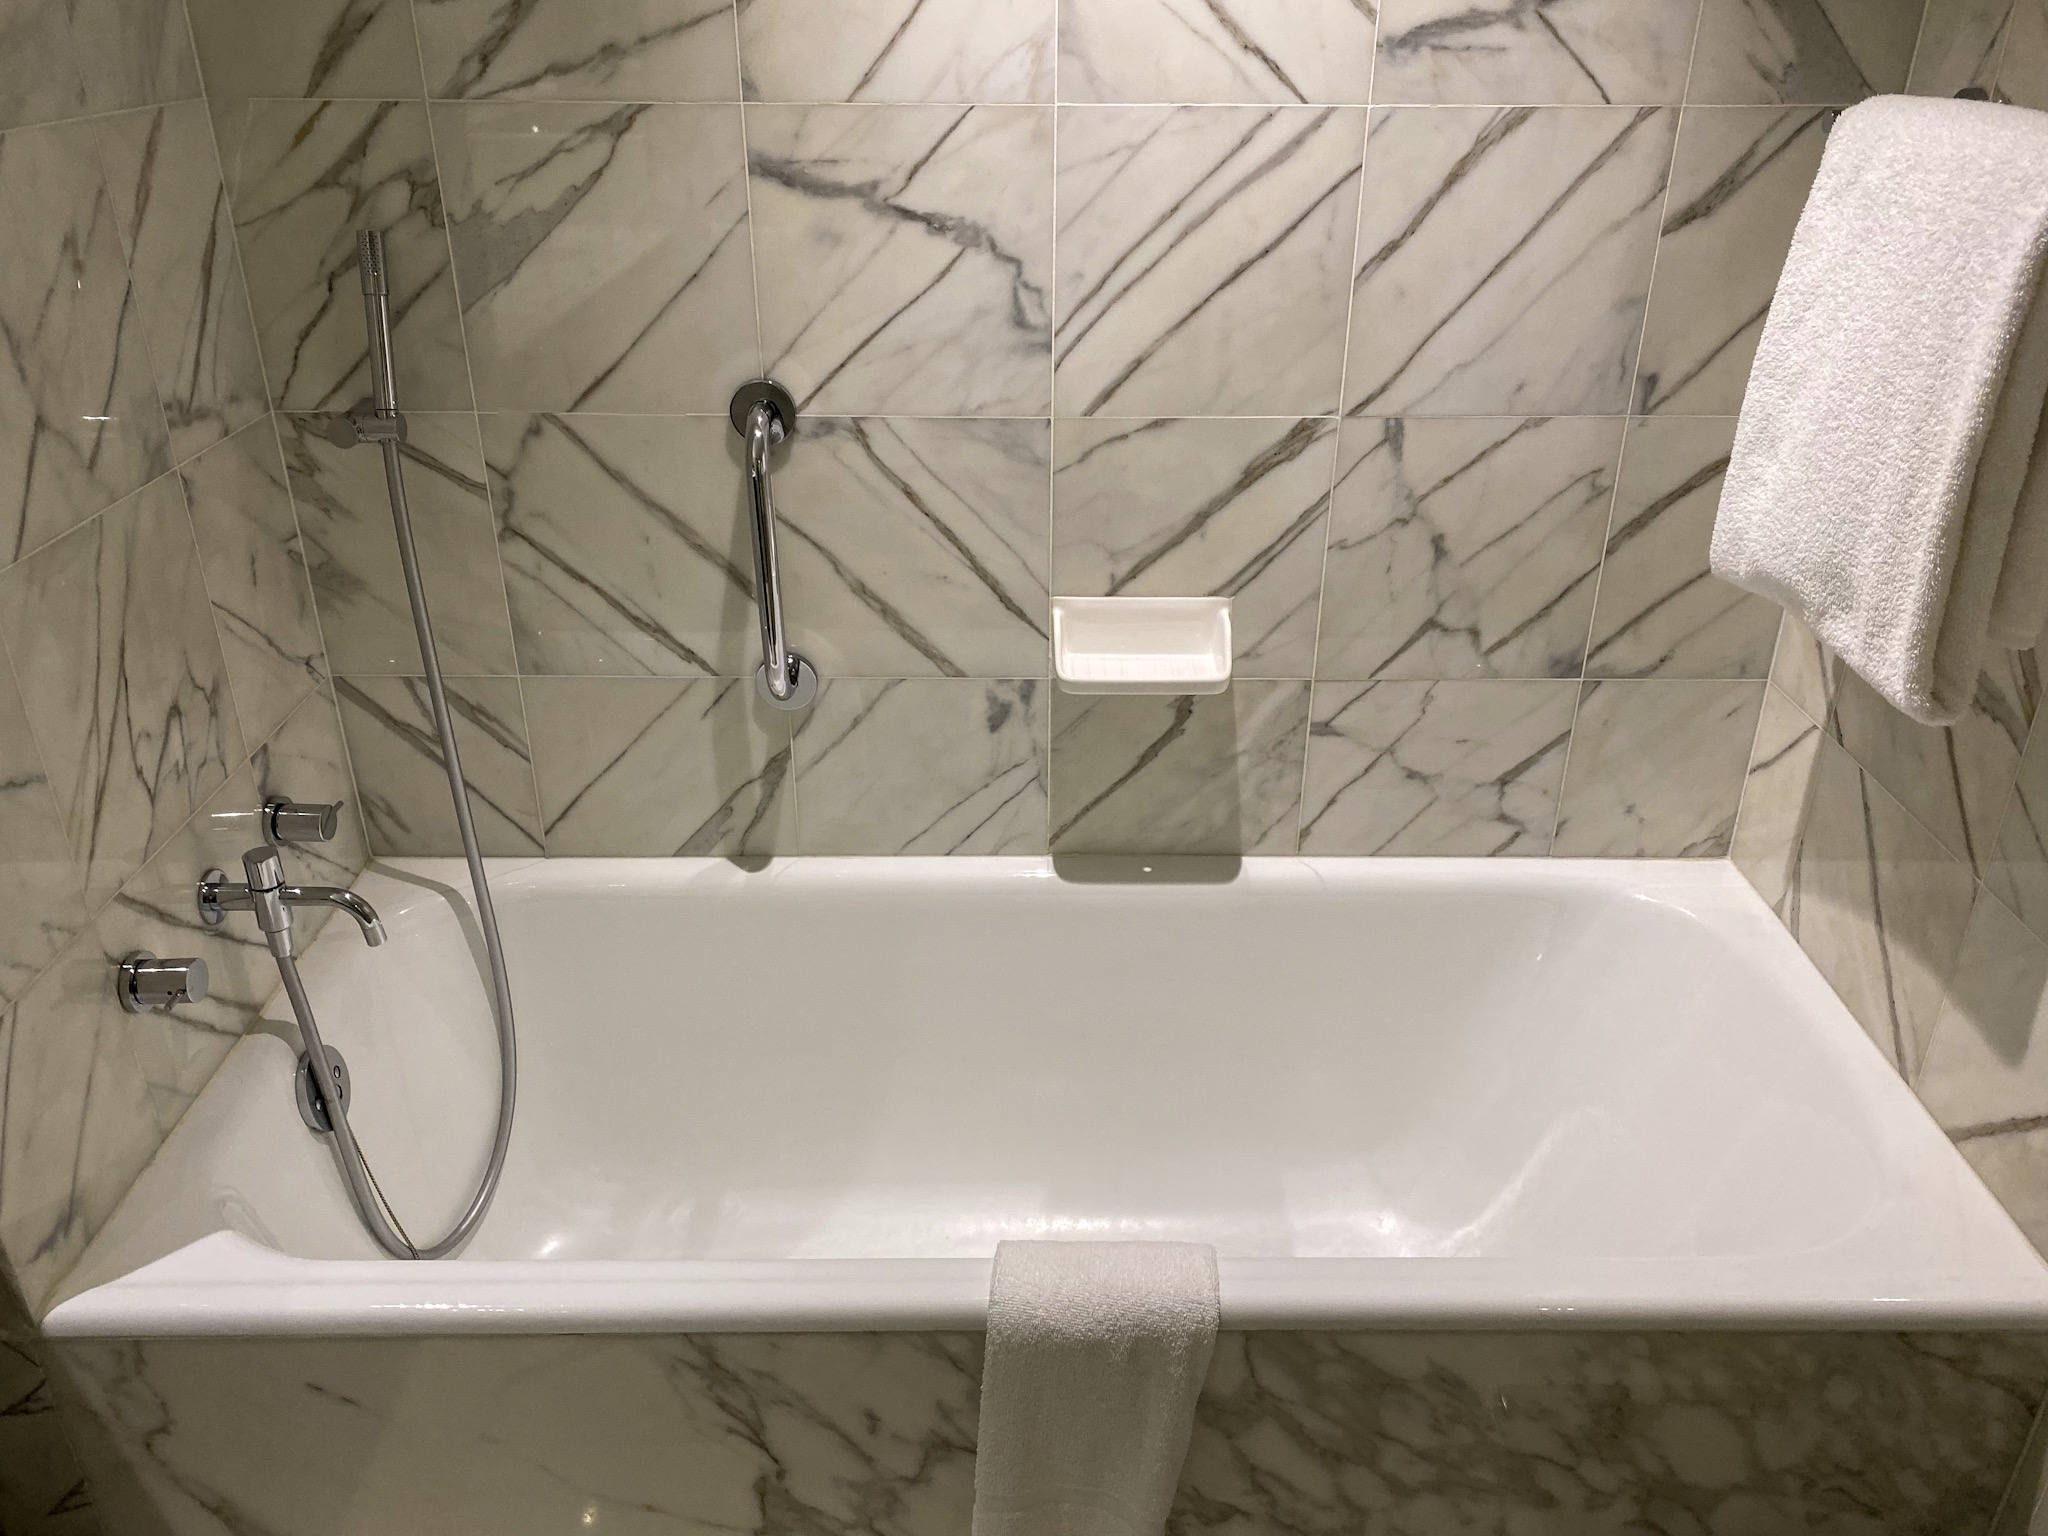 a bathtub with a towel on the wall